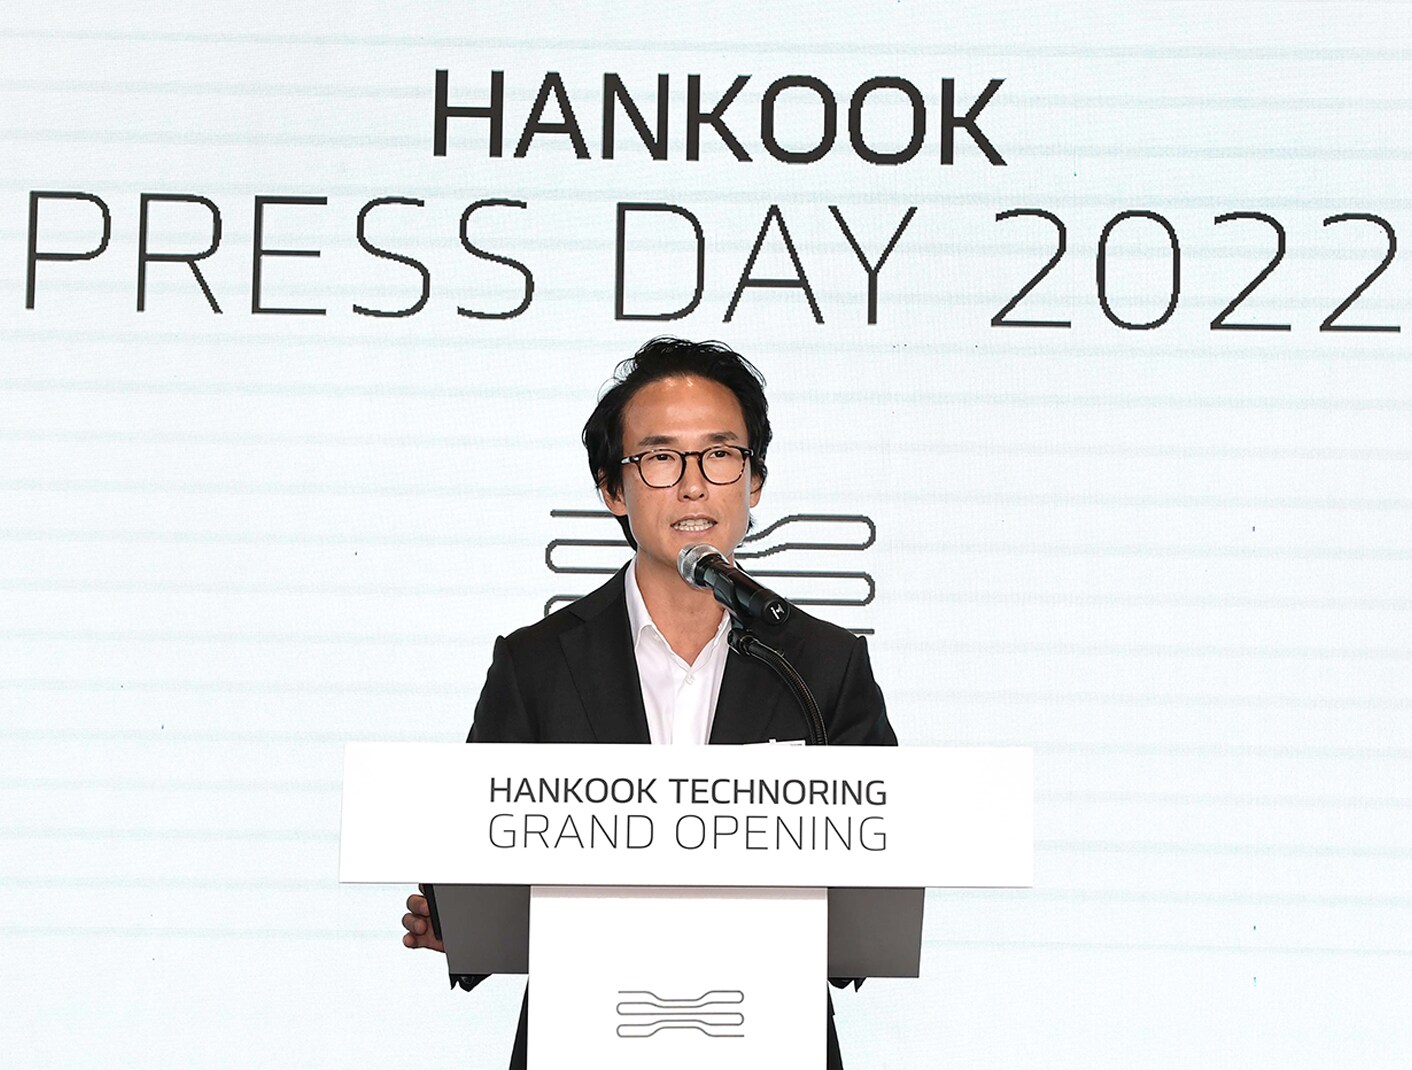 Hankook Tire unveils Asia’s largest proving ground, Hankook Technoring